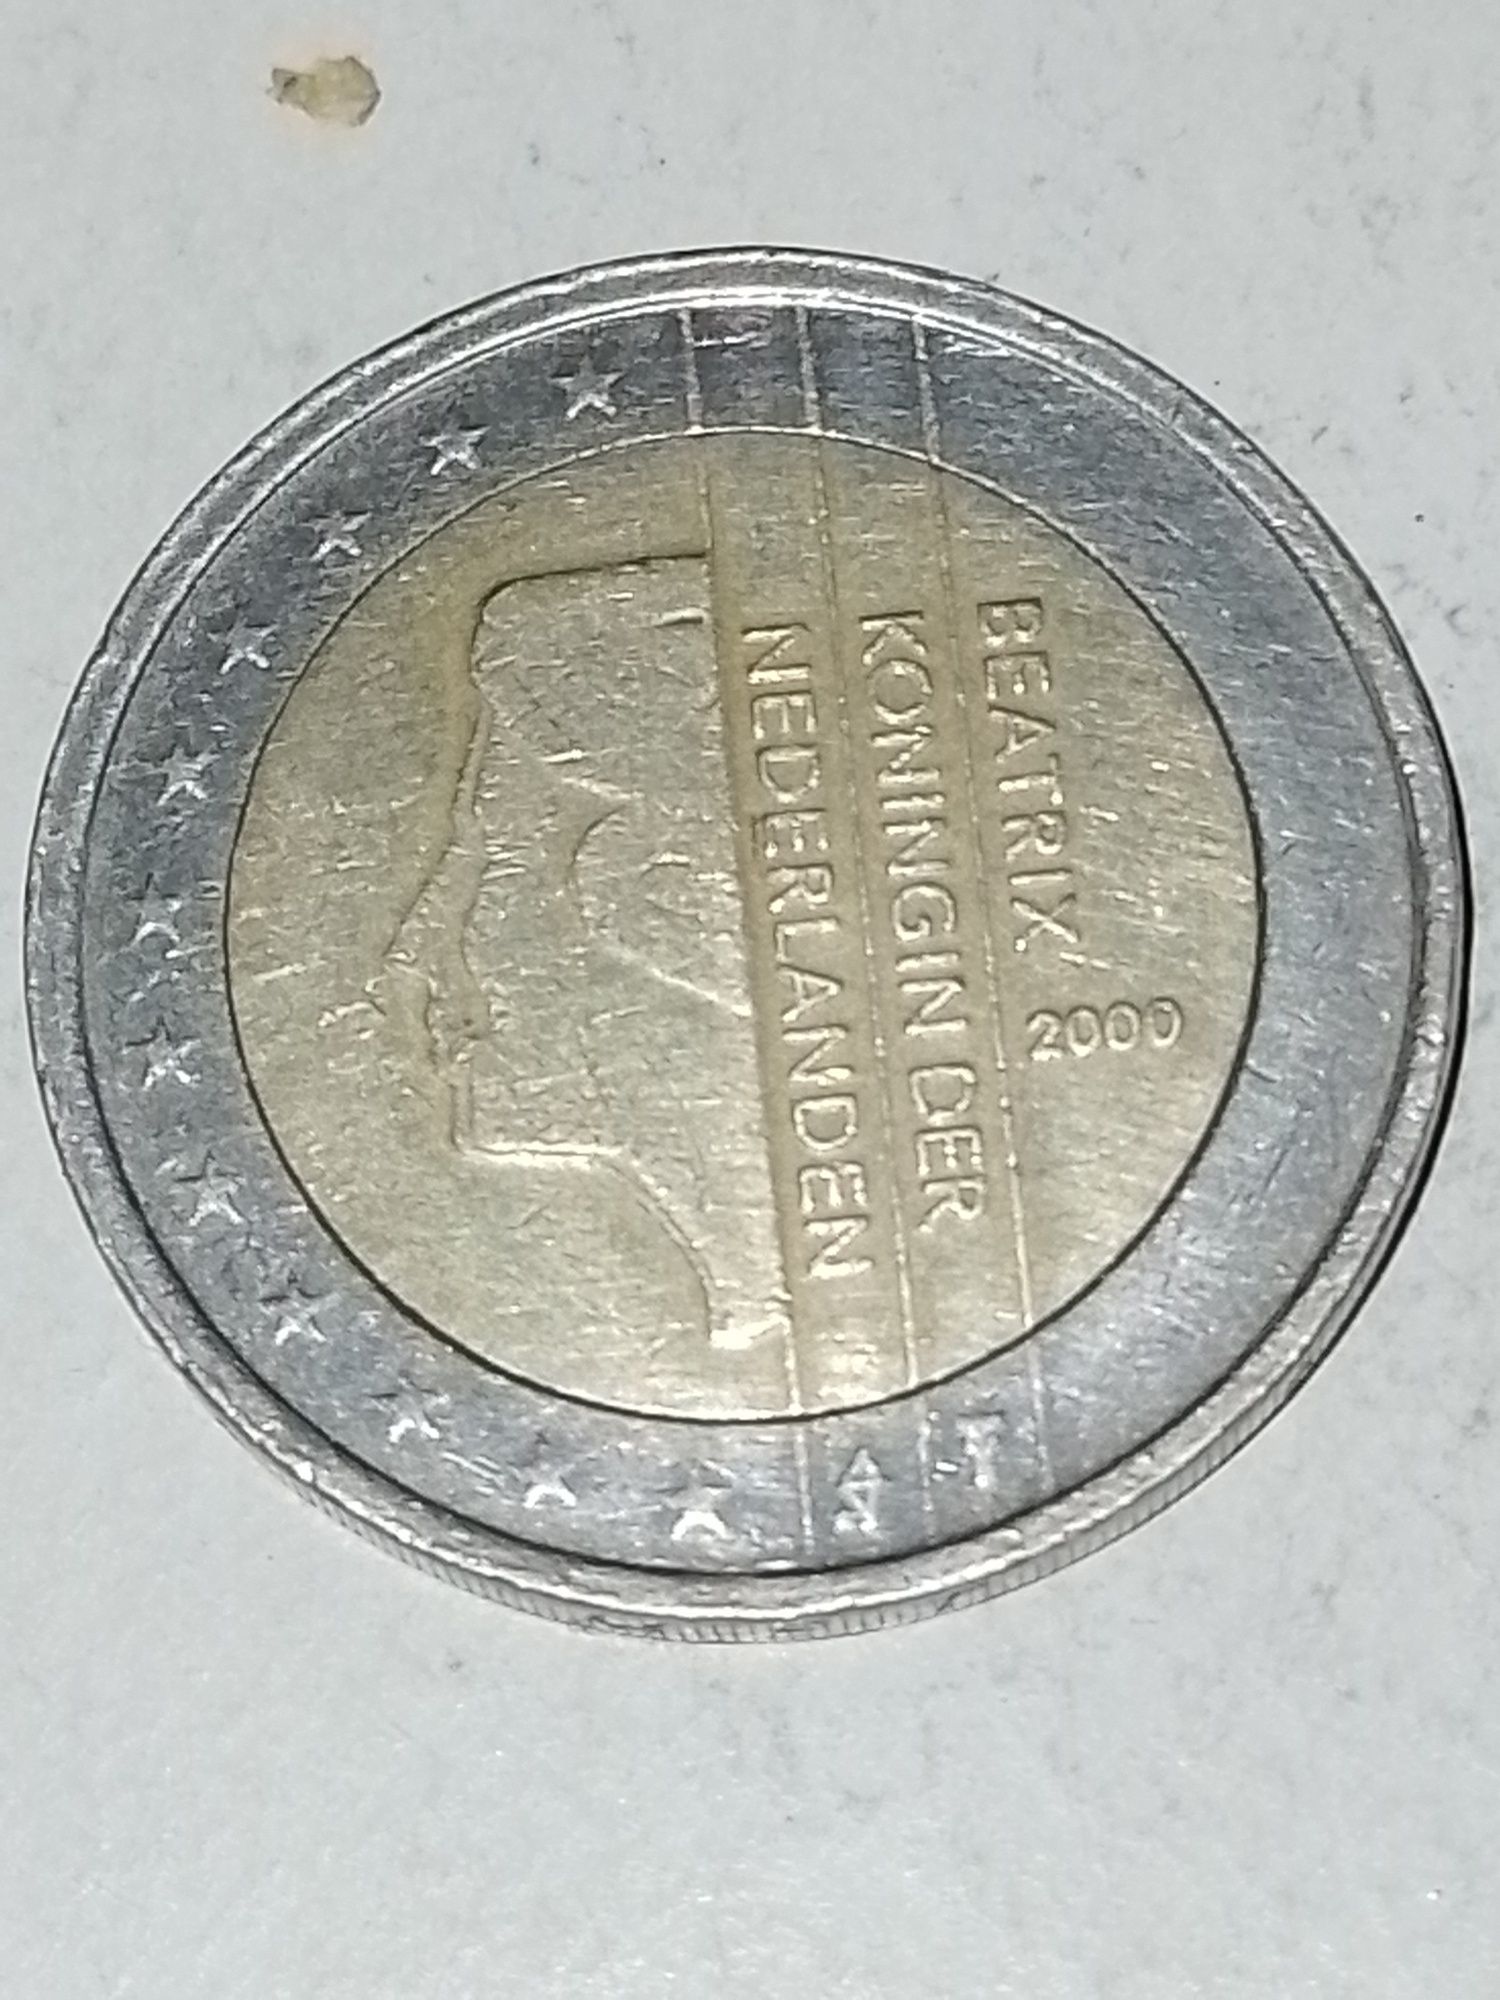 Ofer 2 monede euro rare din Olanda cu regina Biatrix de 2 euro